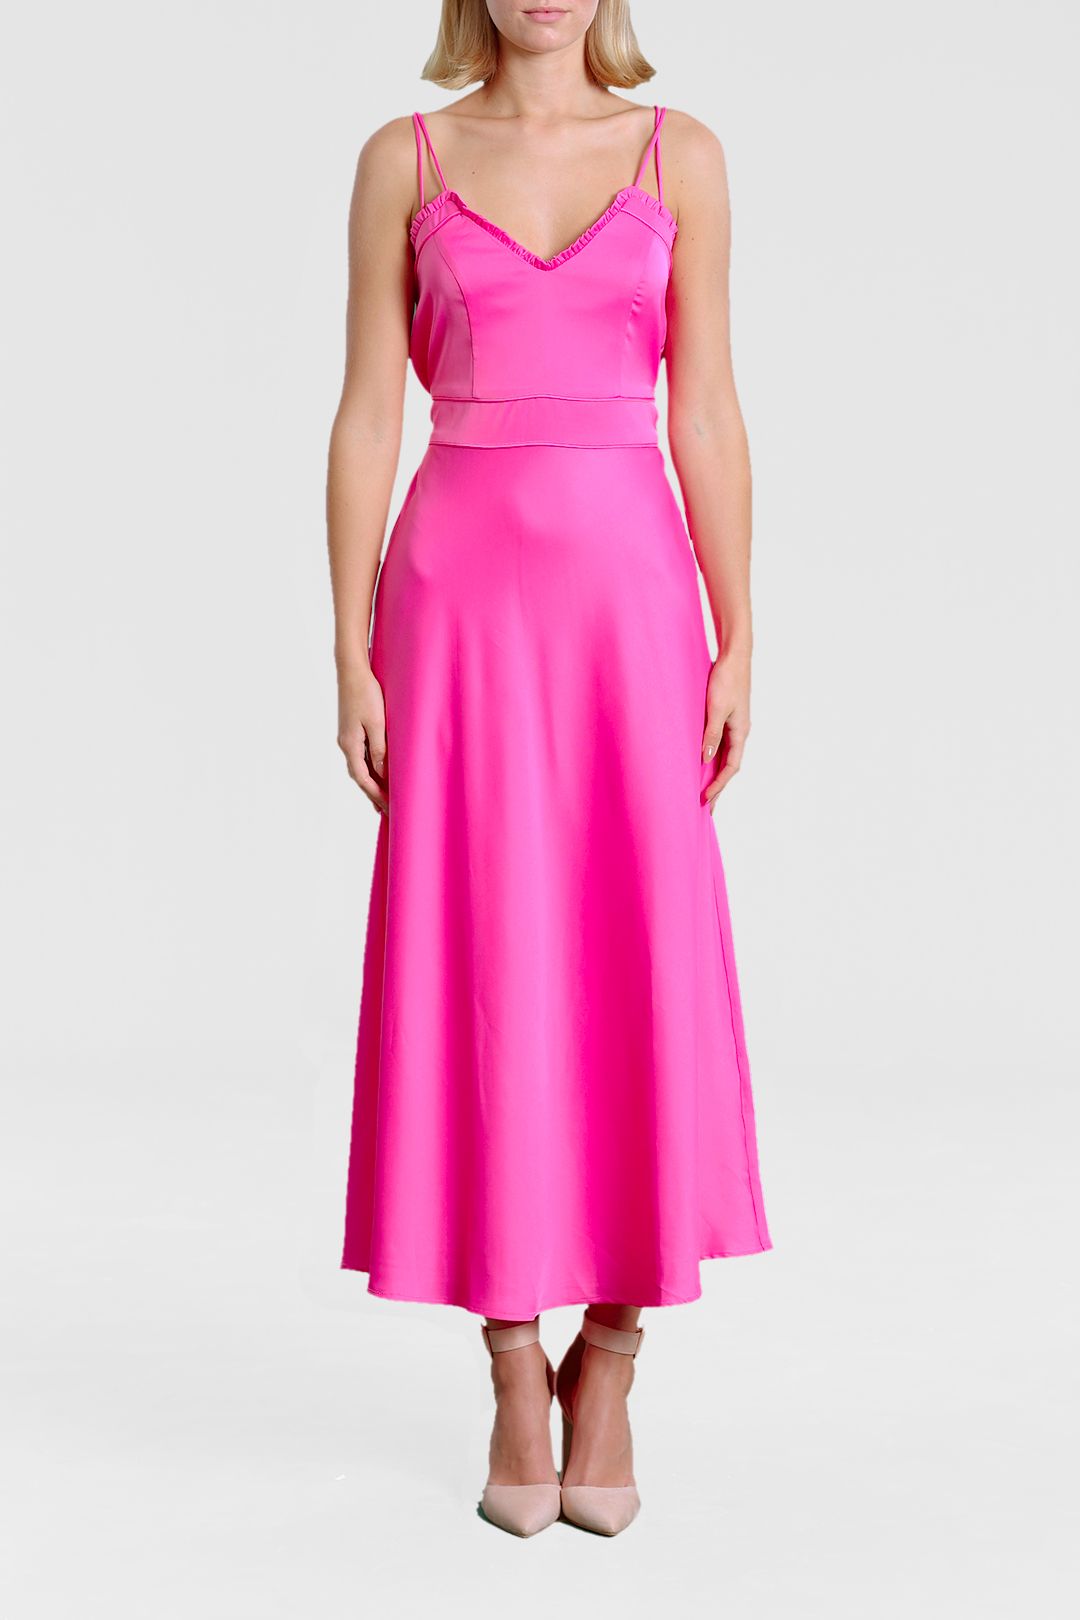 Y.A.S Pink Sleeveless Frill Neckline Dress